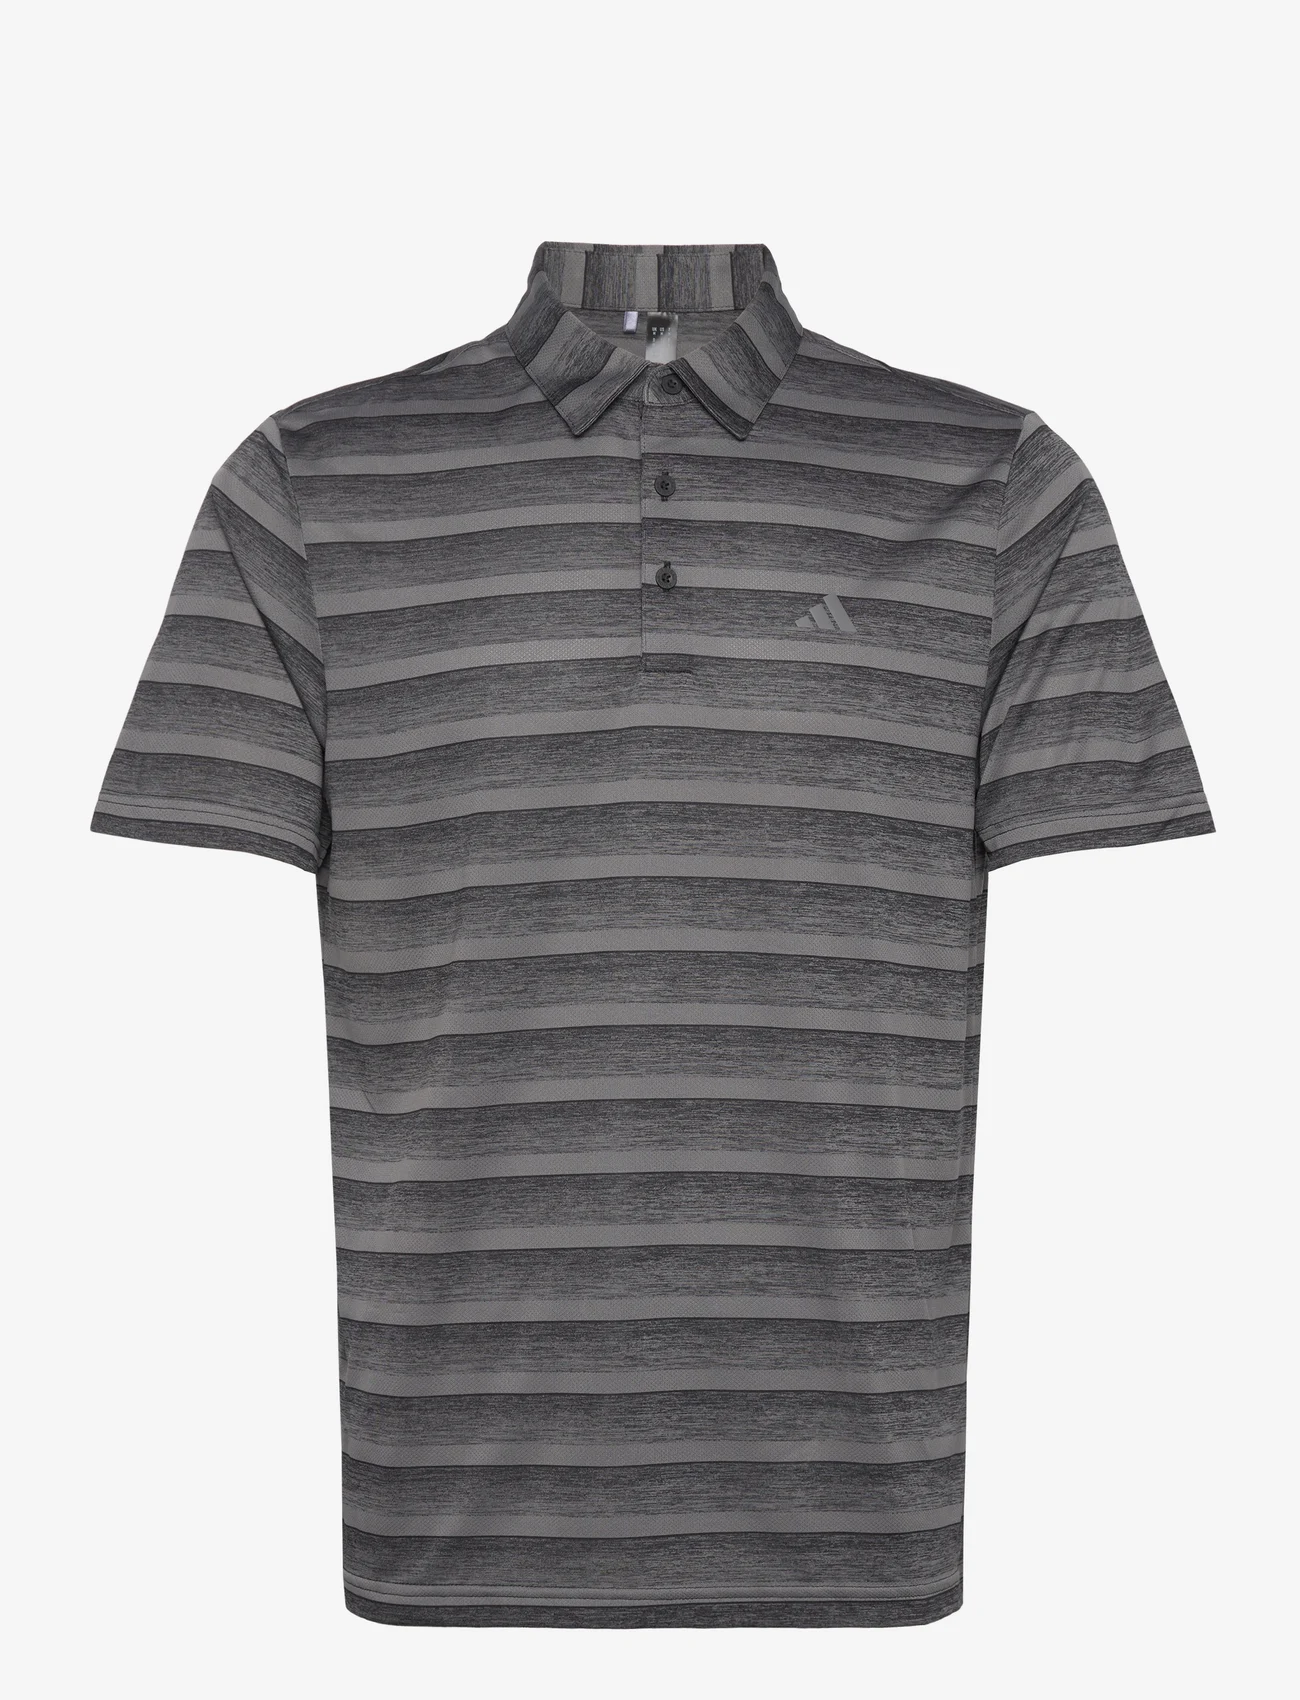 adidas Golf - 2 CLR STRIPE LC - short-sleeved polos - black/grefou - 0